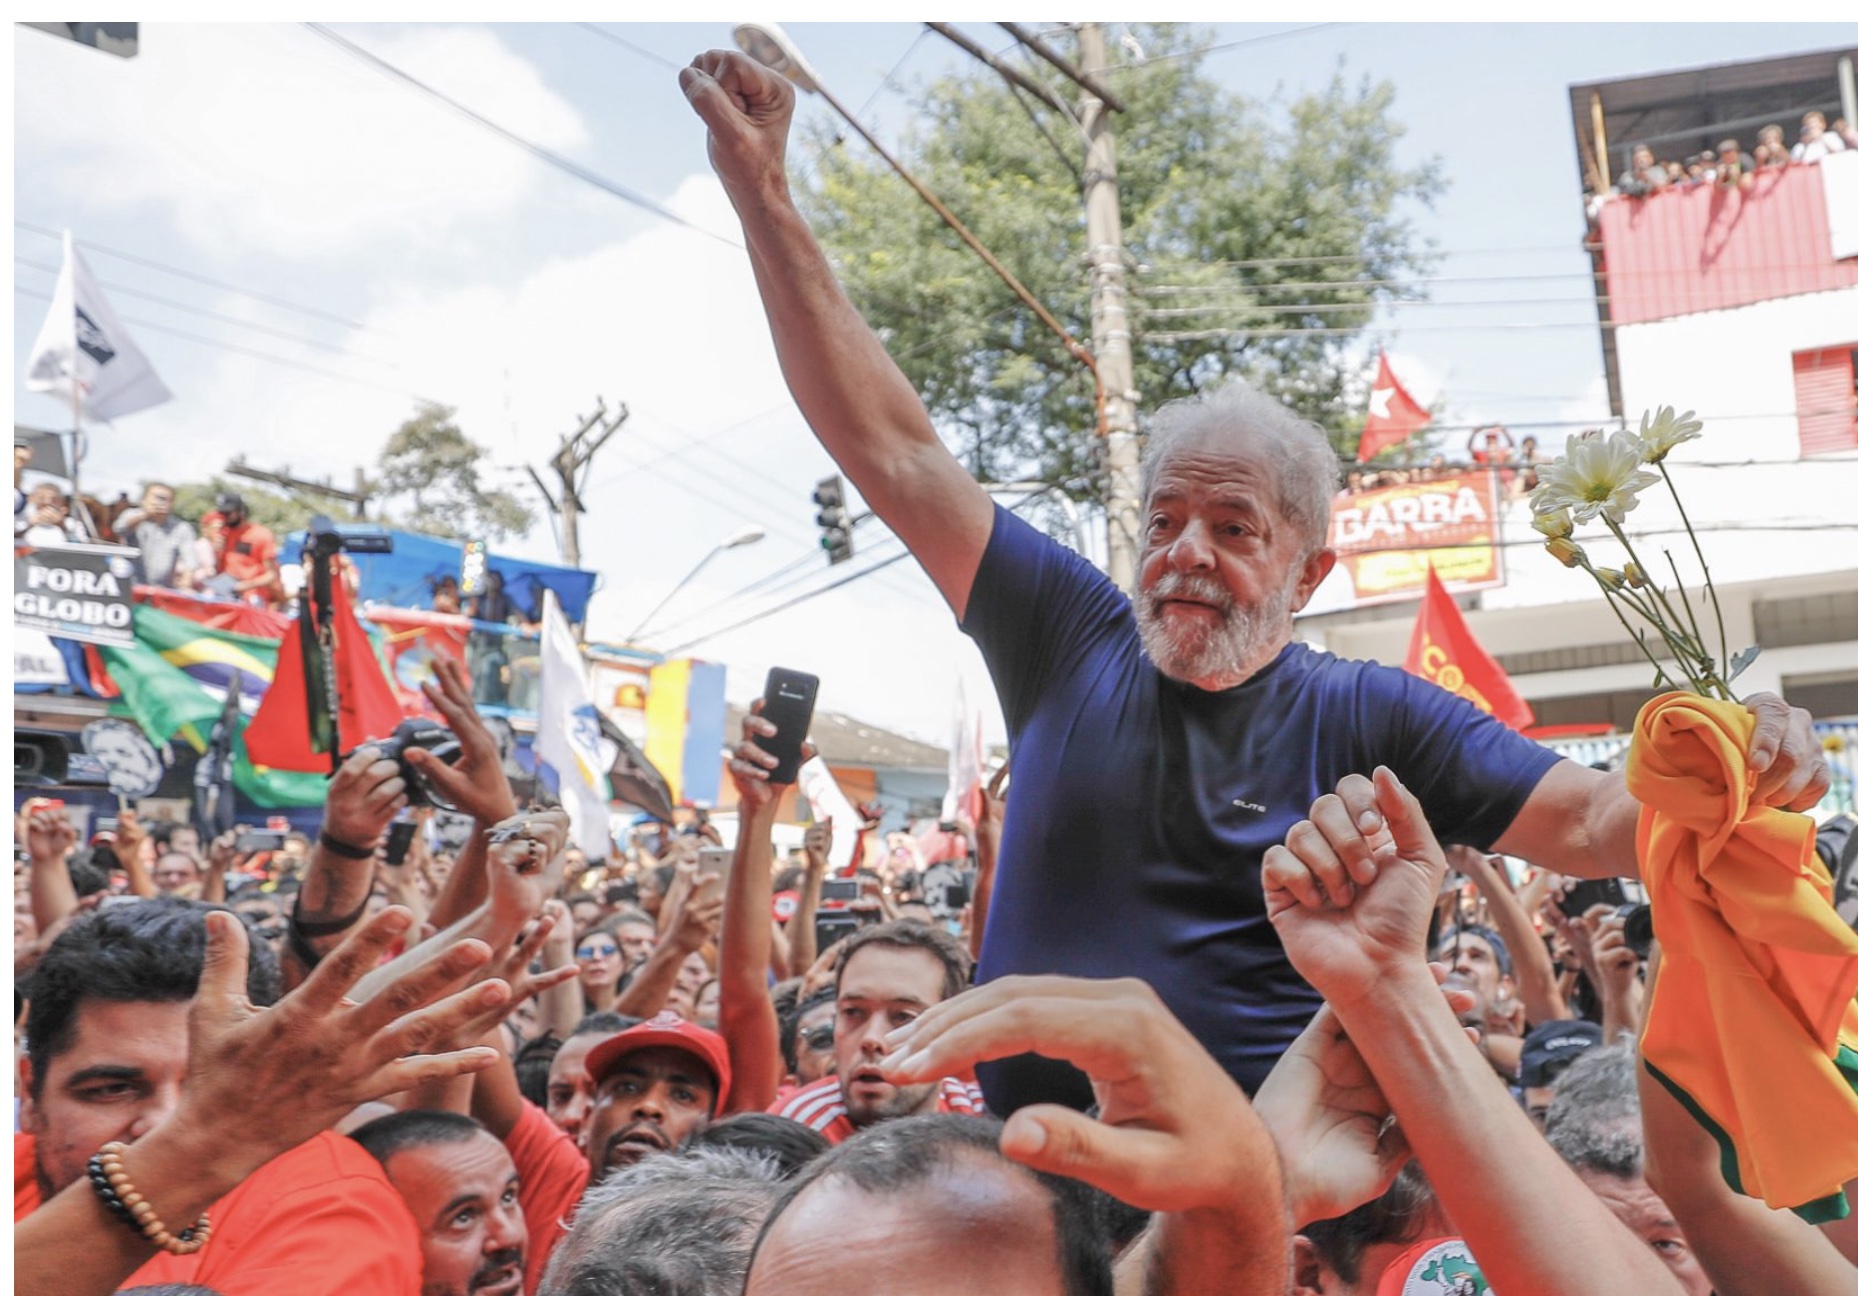 Brazil's ex-president Lula pledges to bolster Latin American integration if elected